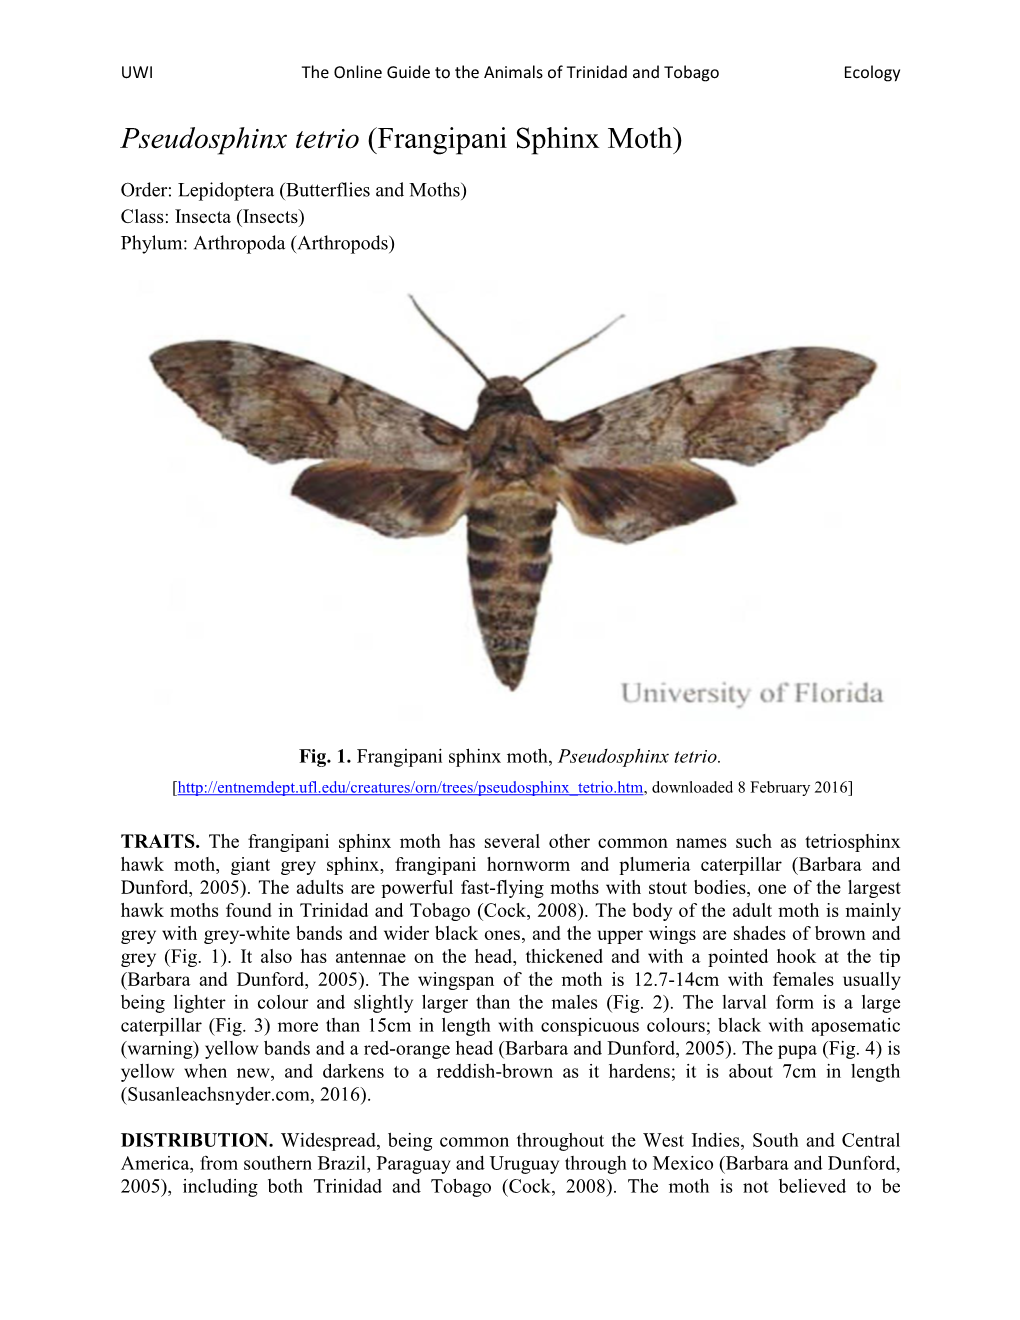 Pseudosphinx Tetrio (Frangipani Sphinx Moth)